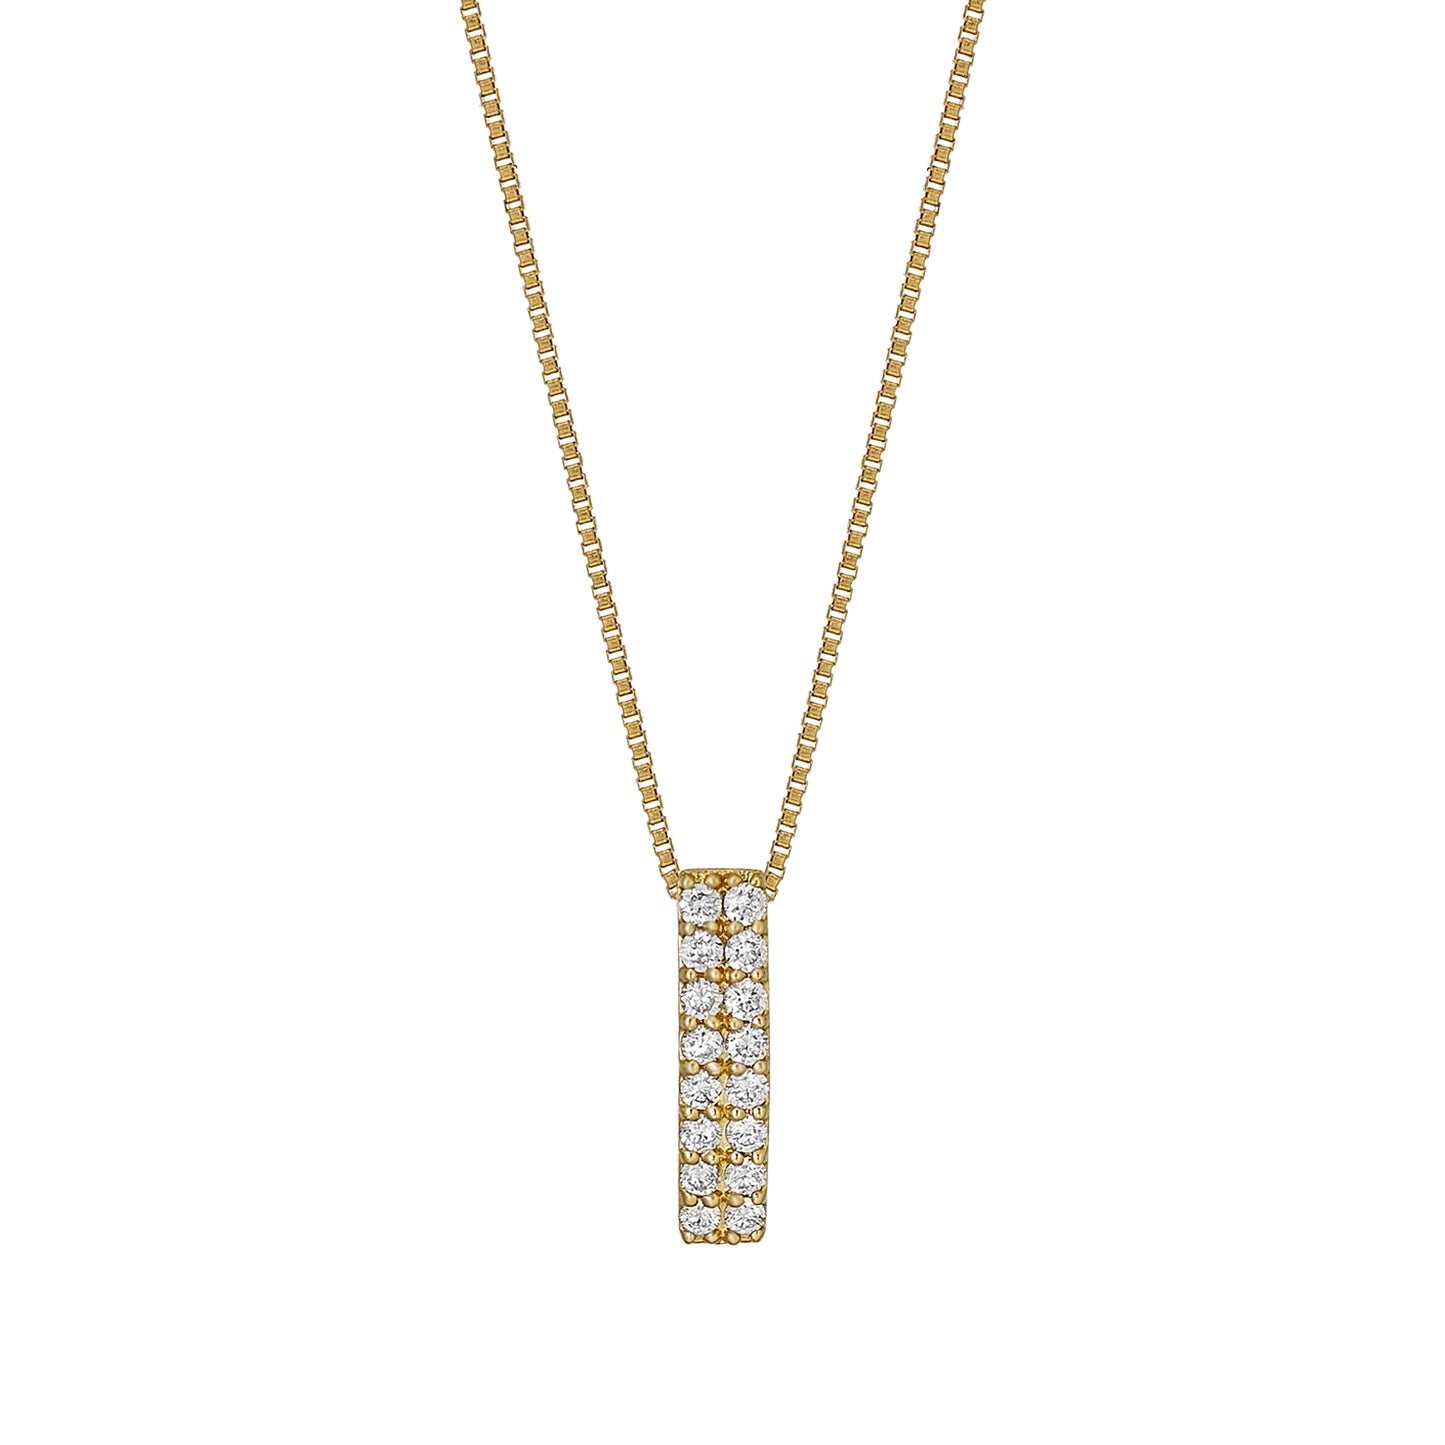 18K Yellow Gold Diamond Rectangle Necklace - Product Image